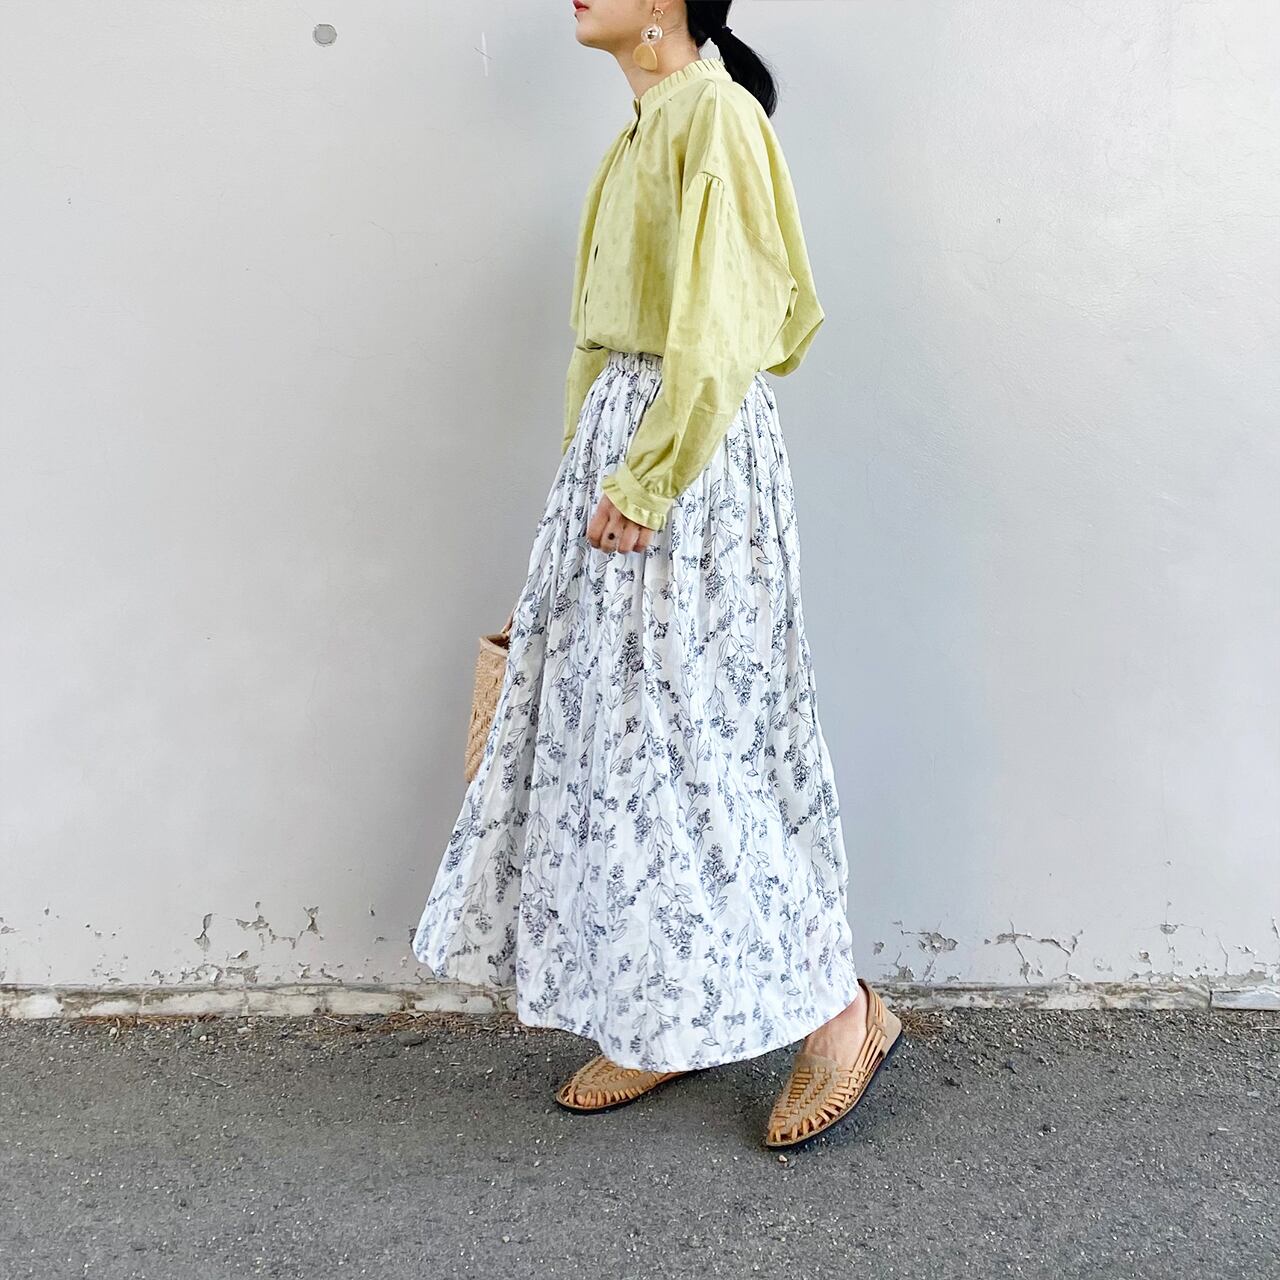 Jacquard print skirt (off white)